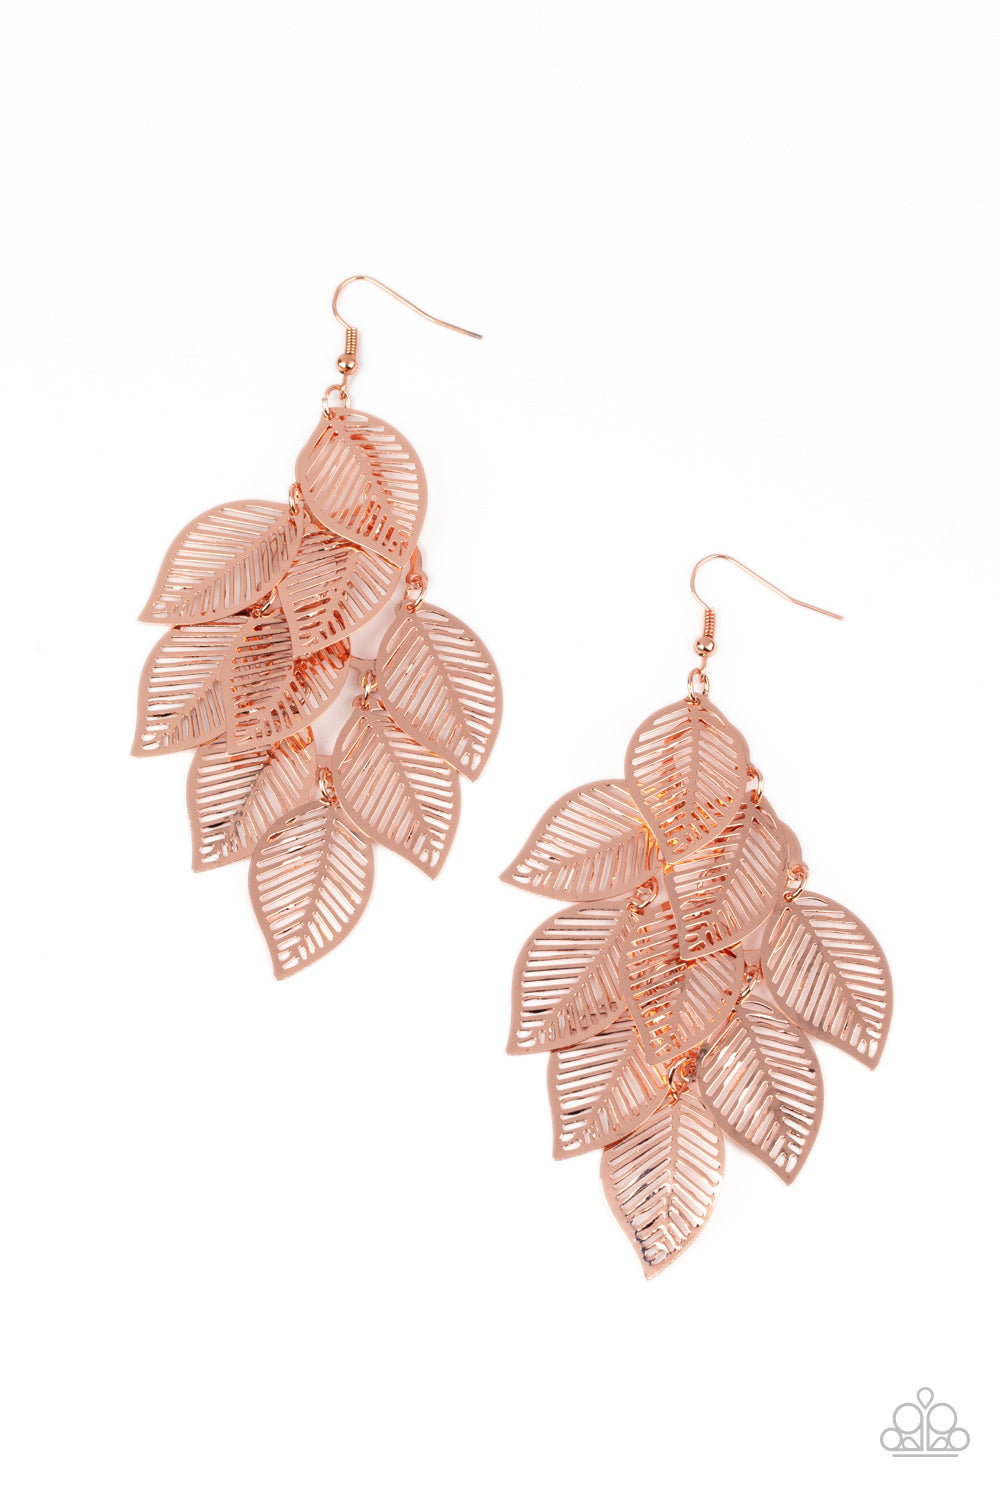 Limitlessly Leafy - Copper Paparazzi Earrings